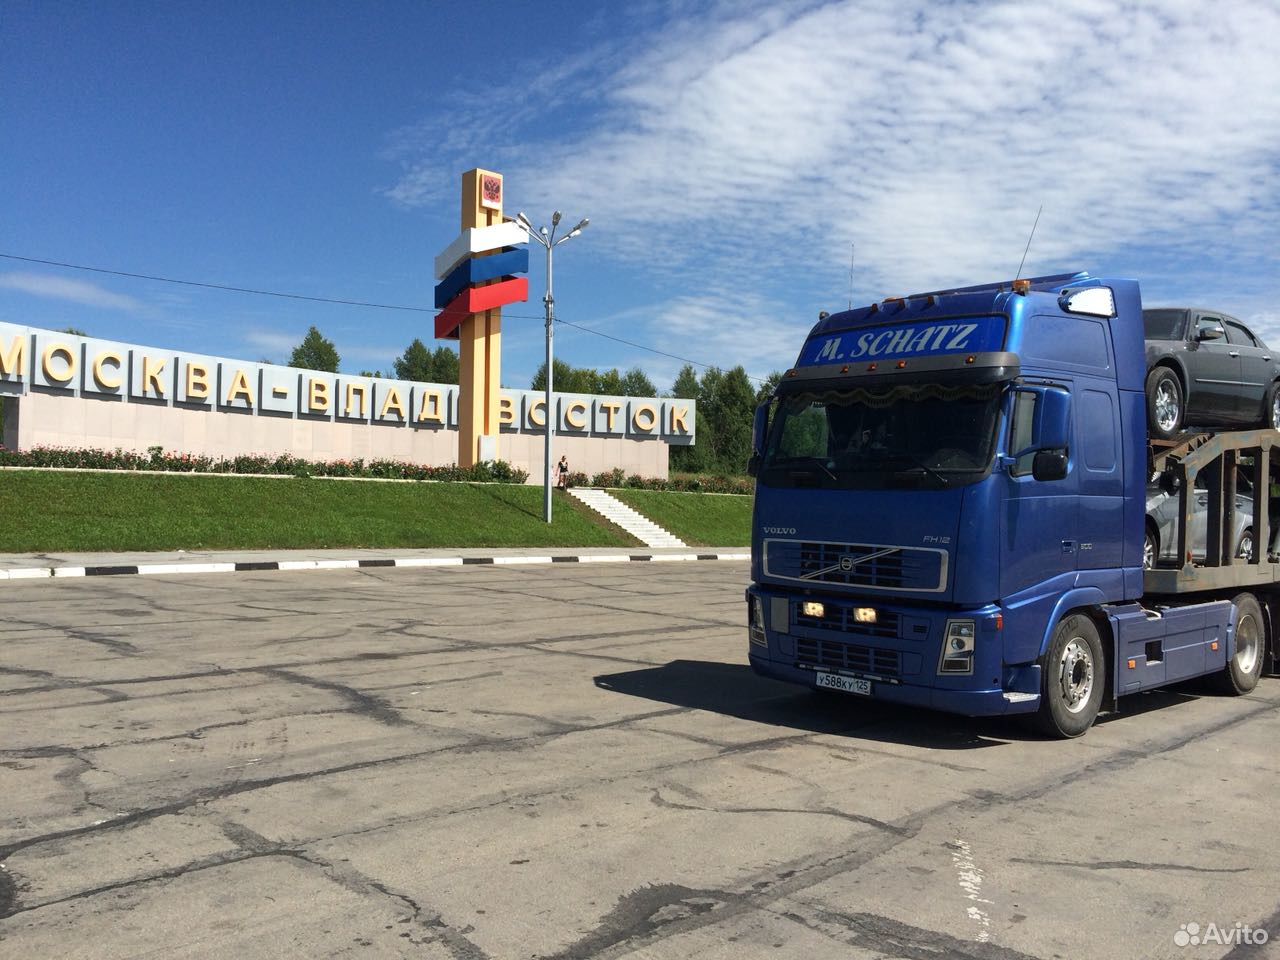 Продажа грузовиков в красноярске